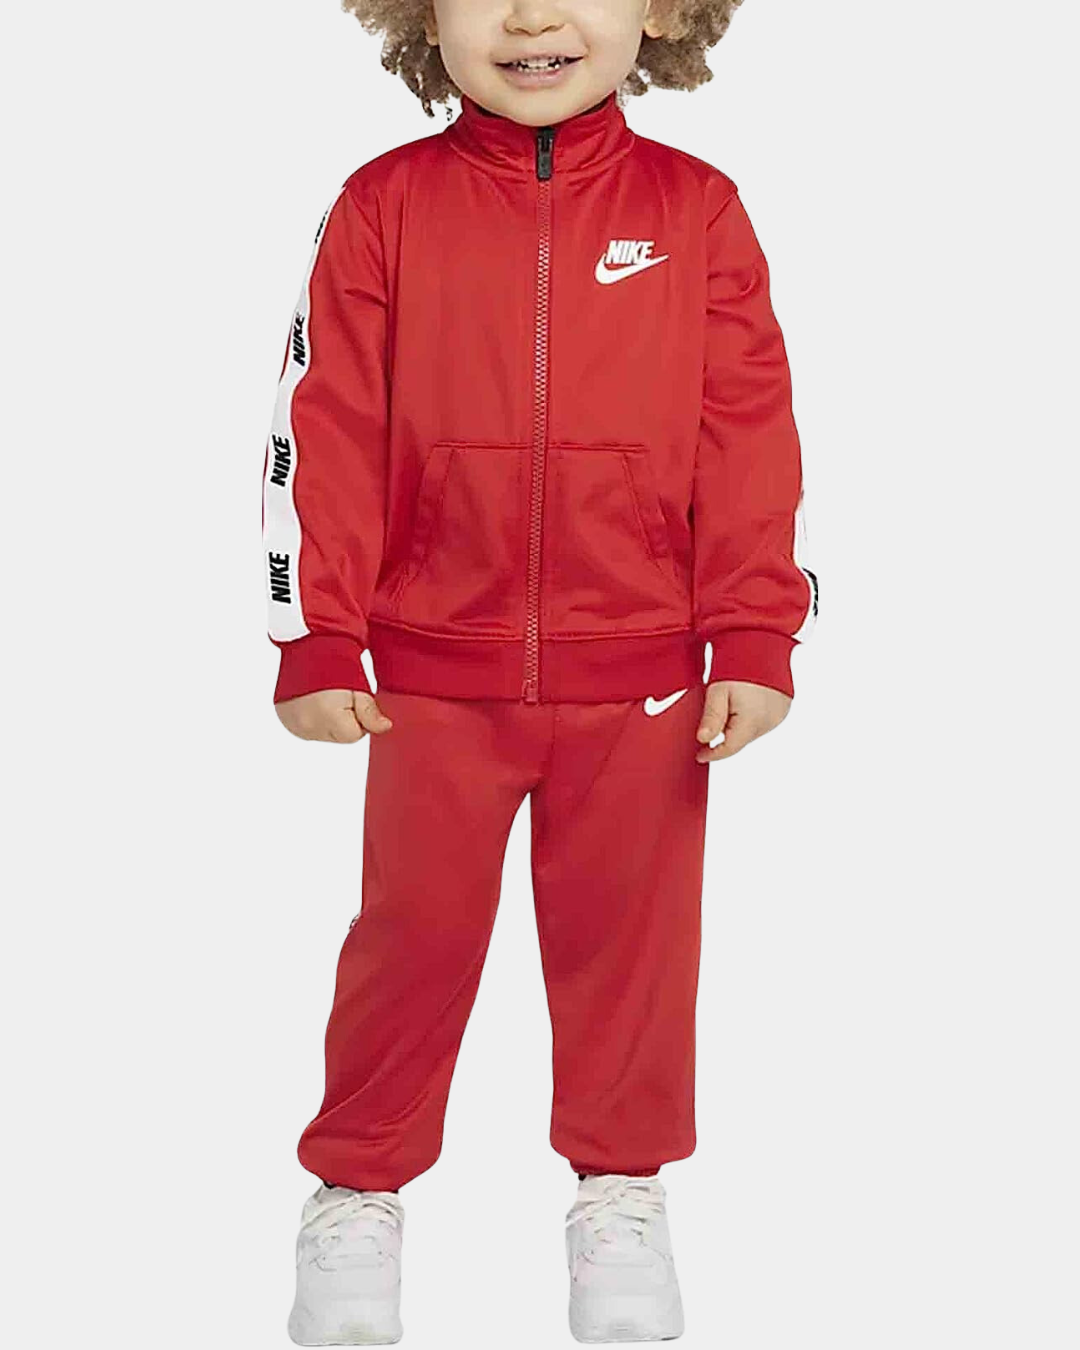 Nike Sportswear Baby Tracksuit - Red/White